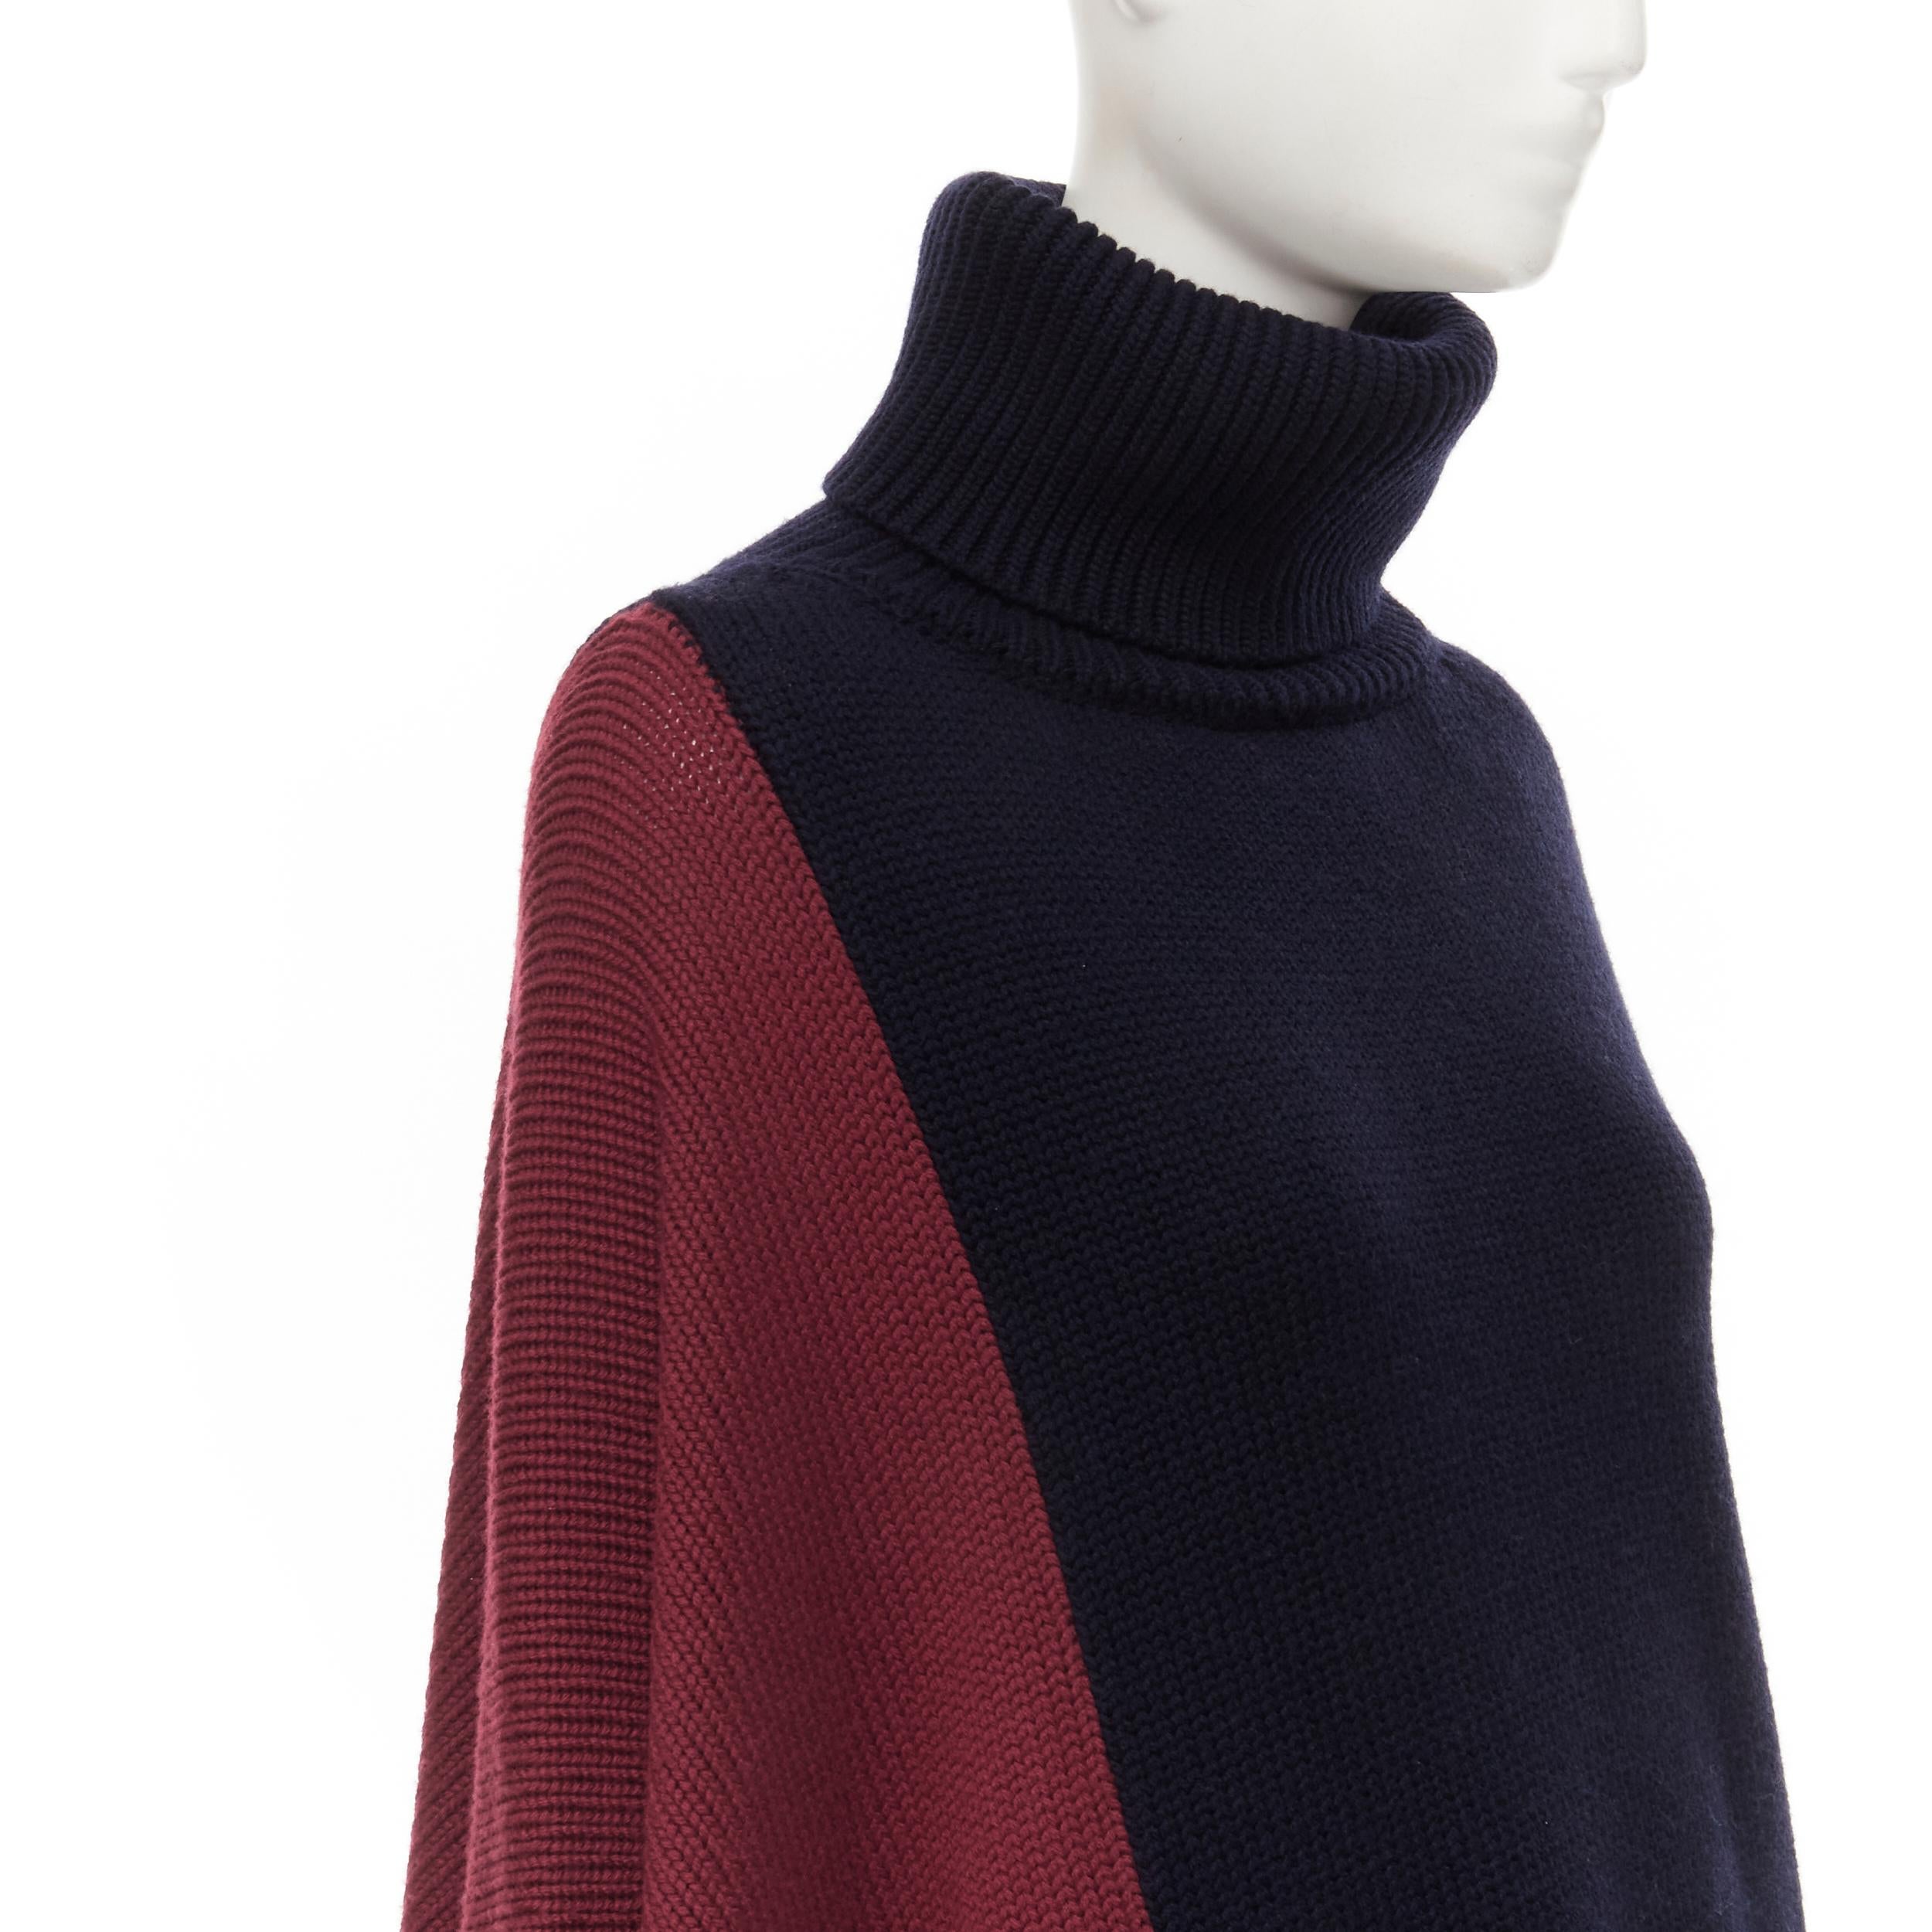 new MONSE 100% extra fine merino wool navy burgundy bias sweater cape pocho XS 1